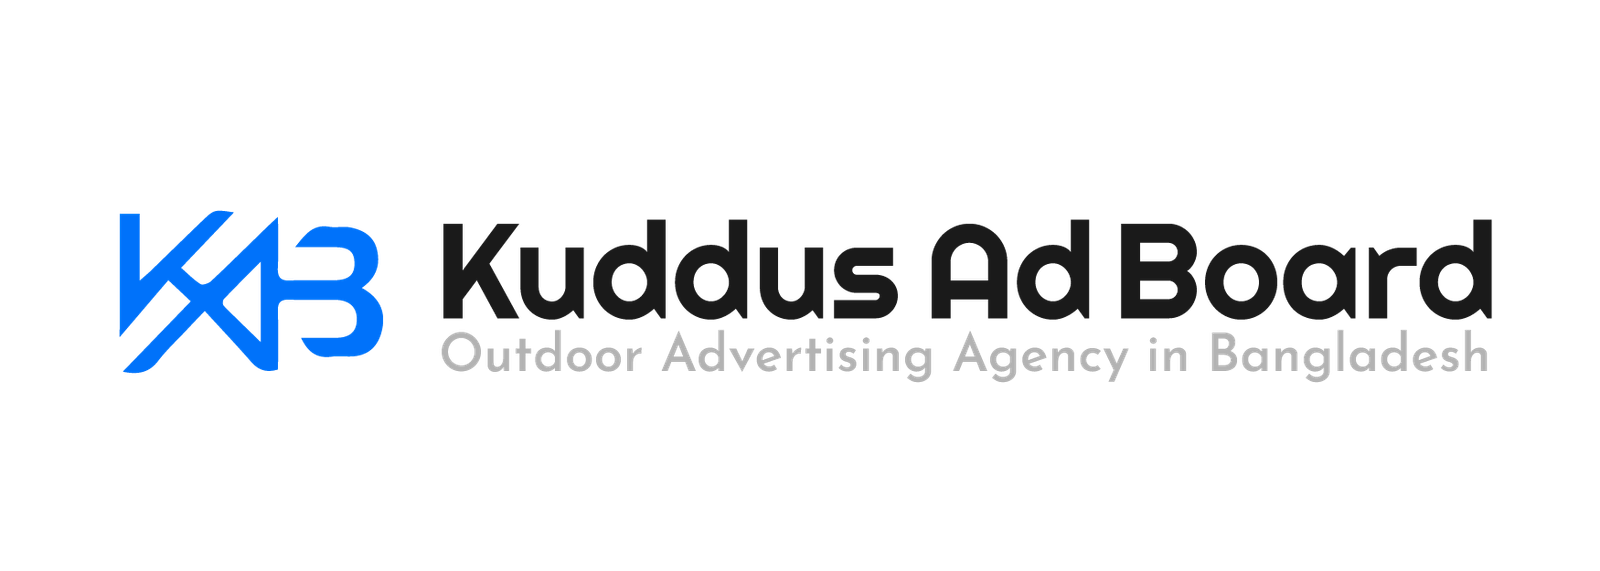 kuddus ad board logo and tagline